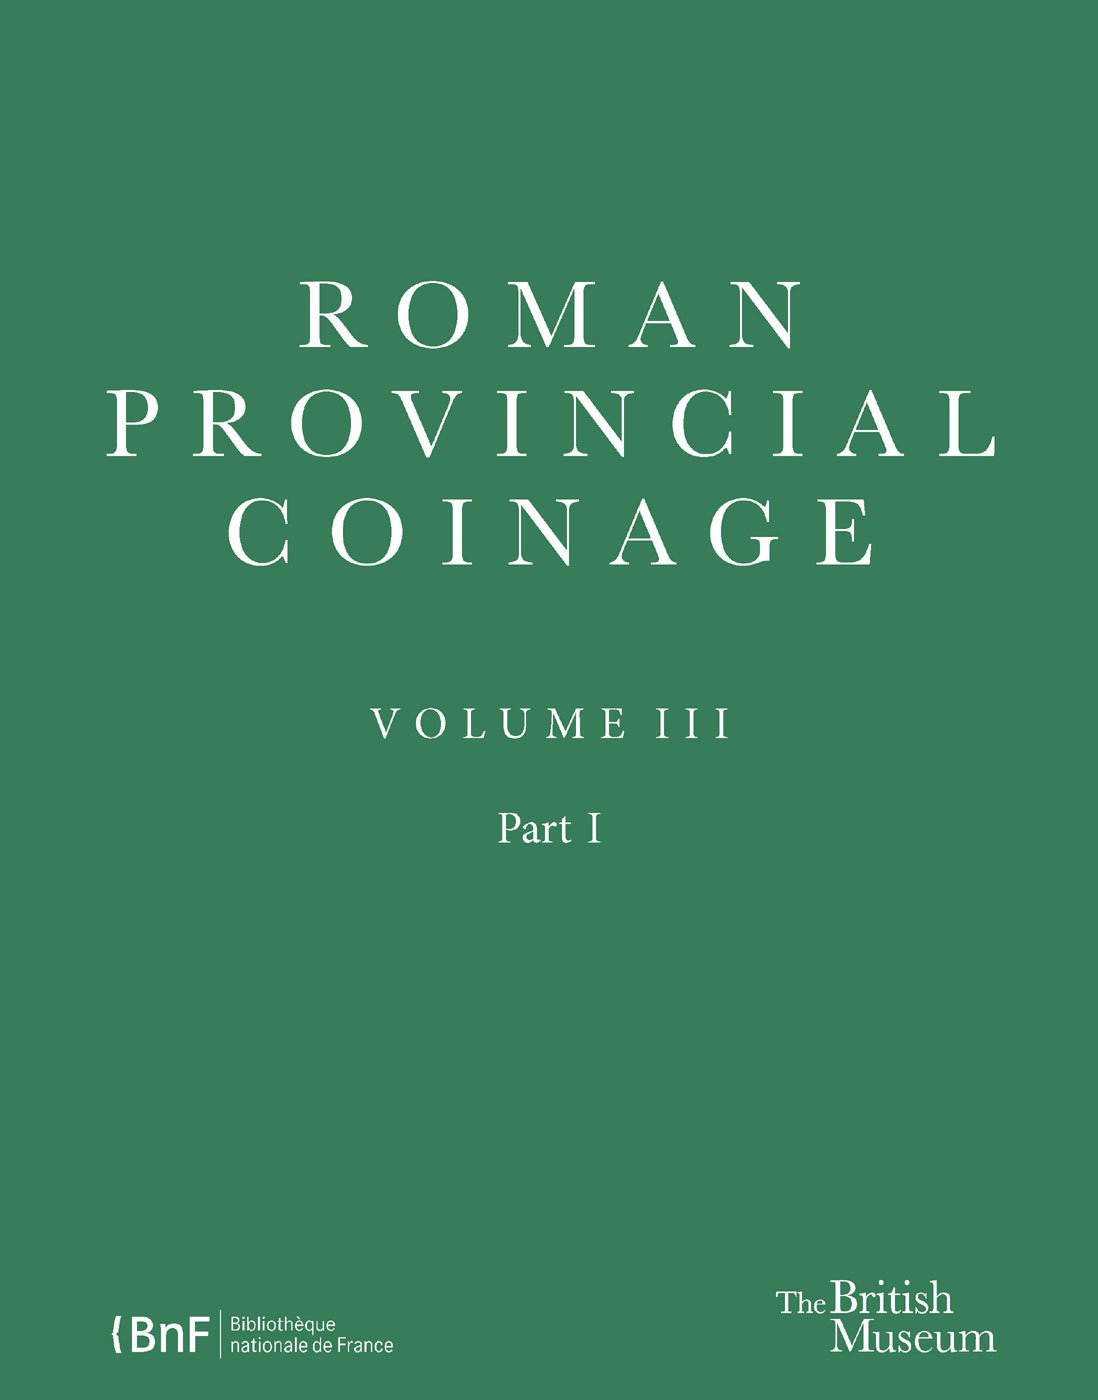 Roman Provincial Coinage Vol. III. Part 1 : Nerva, Trajan and Hadrian (AD 96138), 2015, 2 vol., total 1368 p.